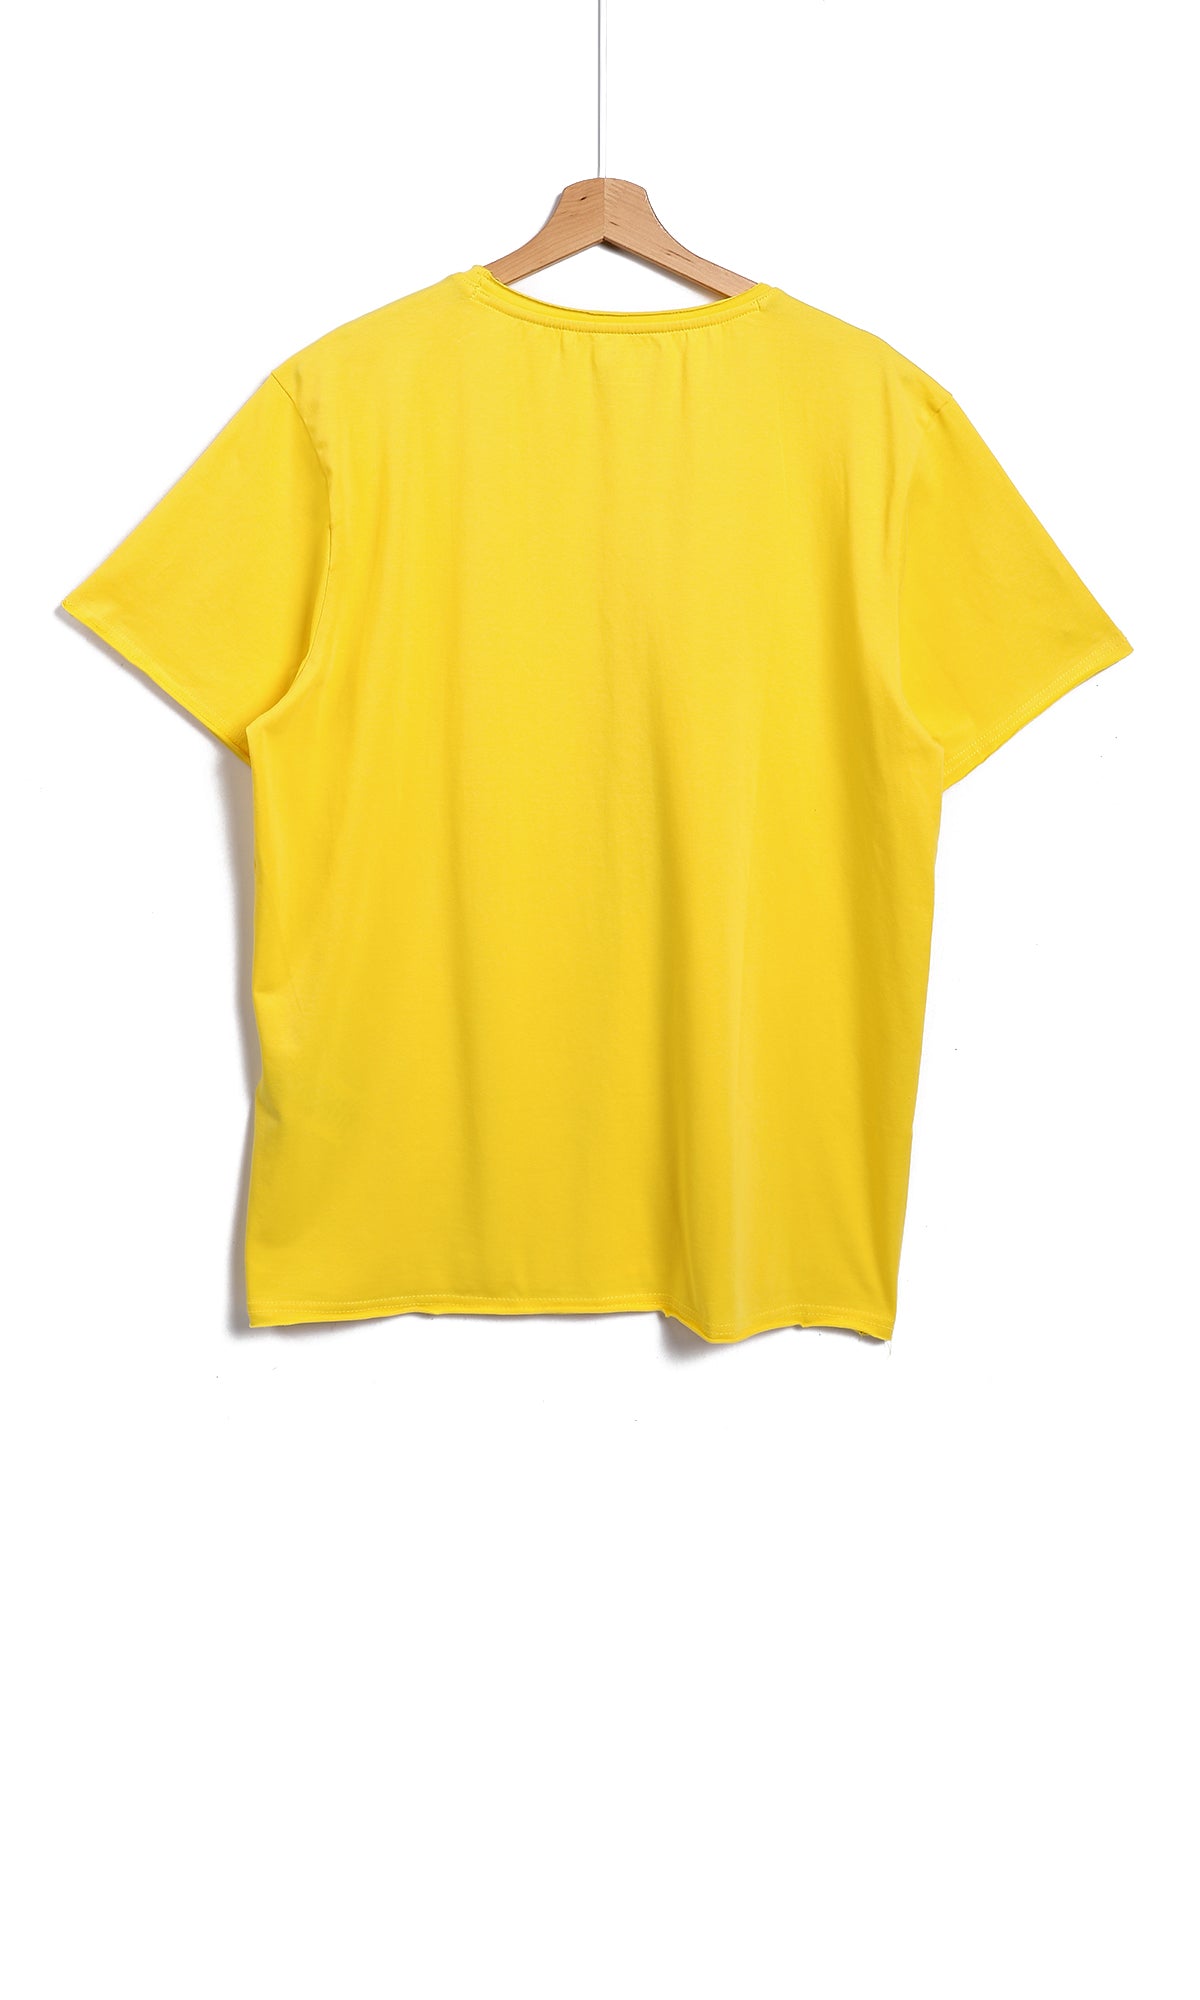 O164618 Solid Patterned Basic Yellow Plain T-Shirt